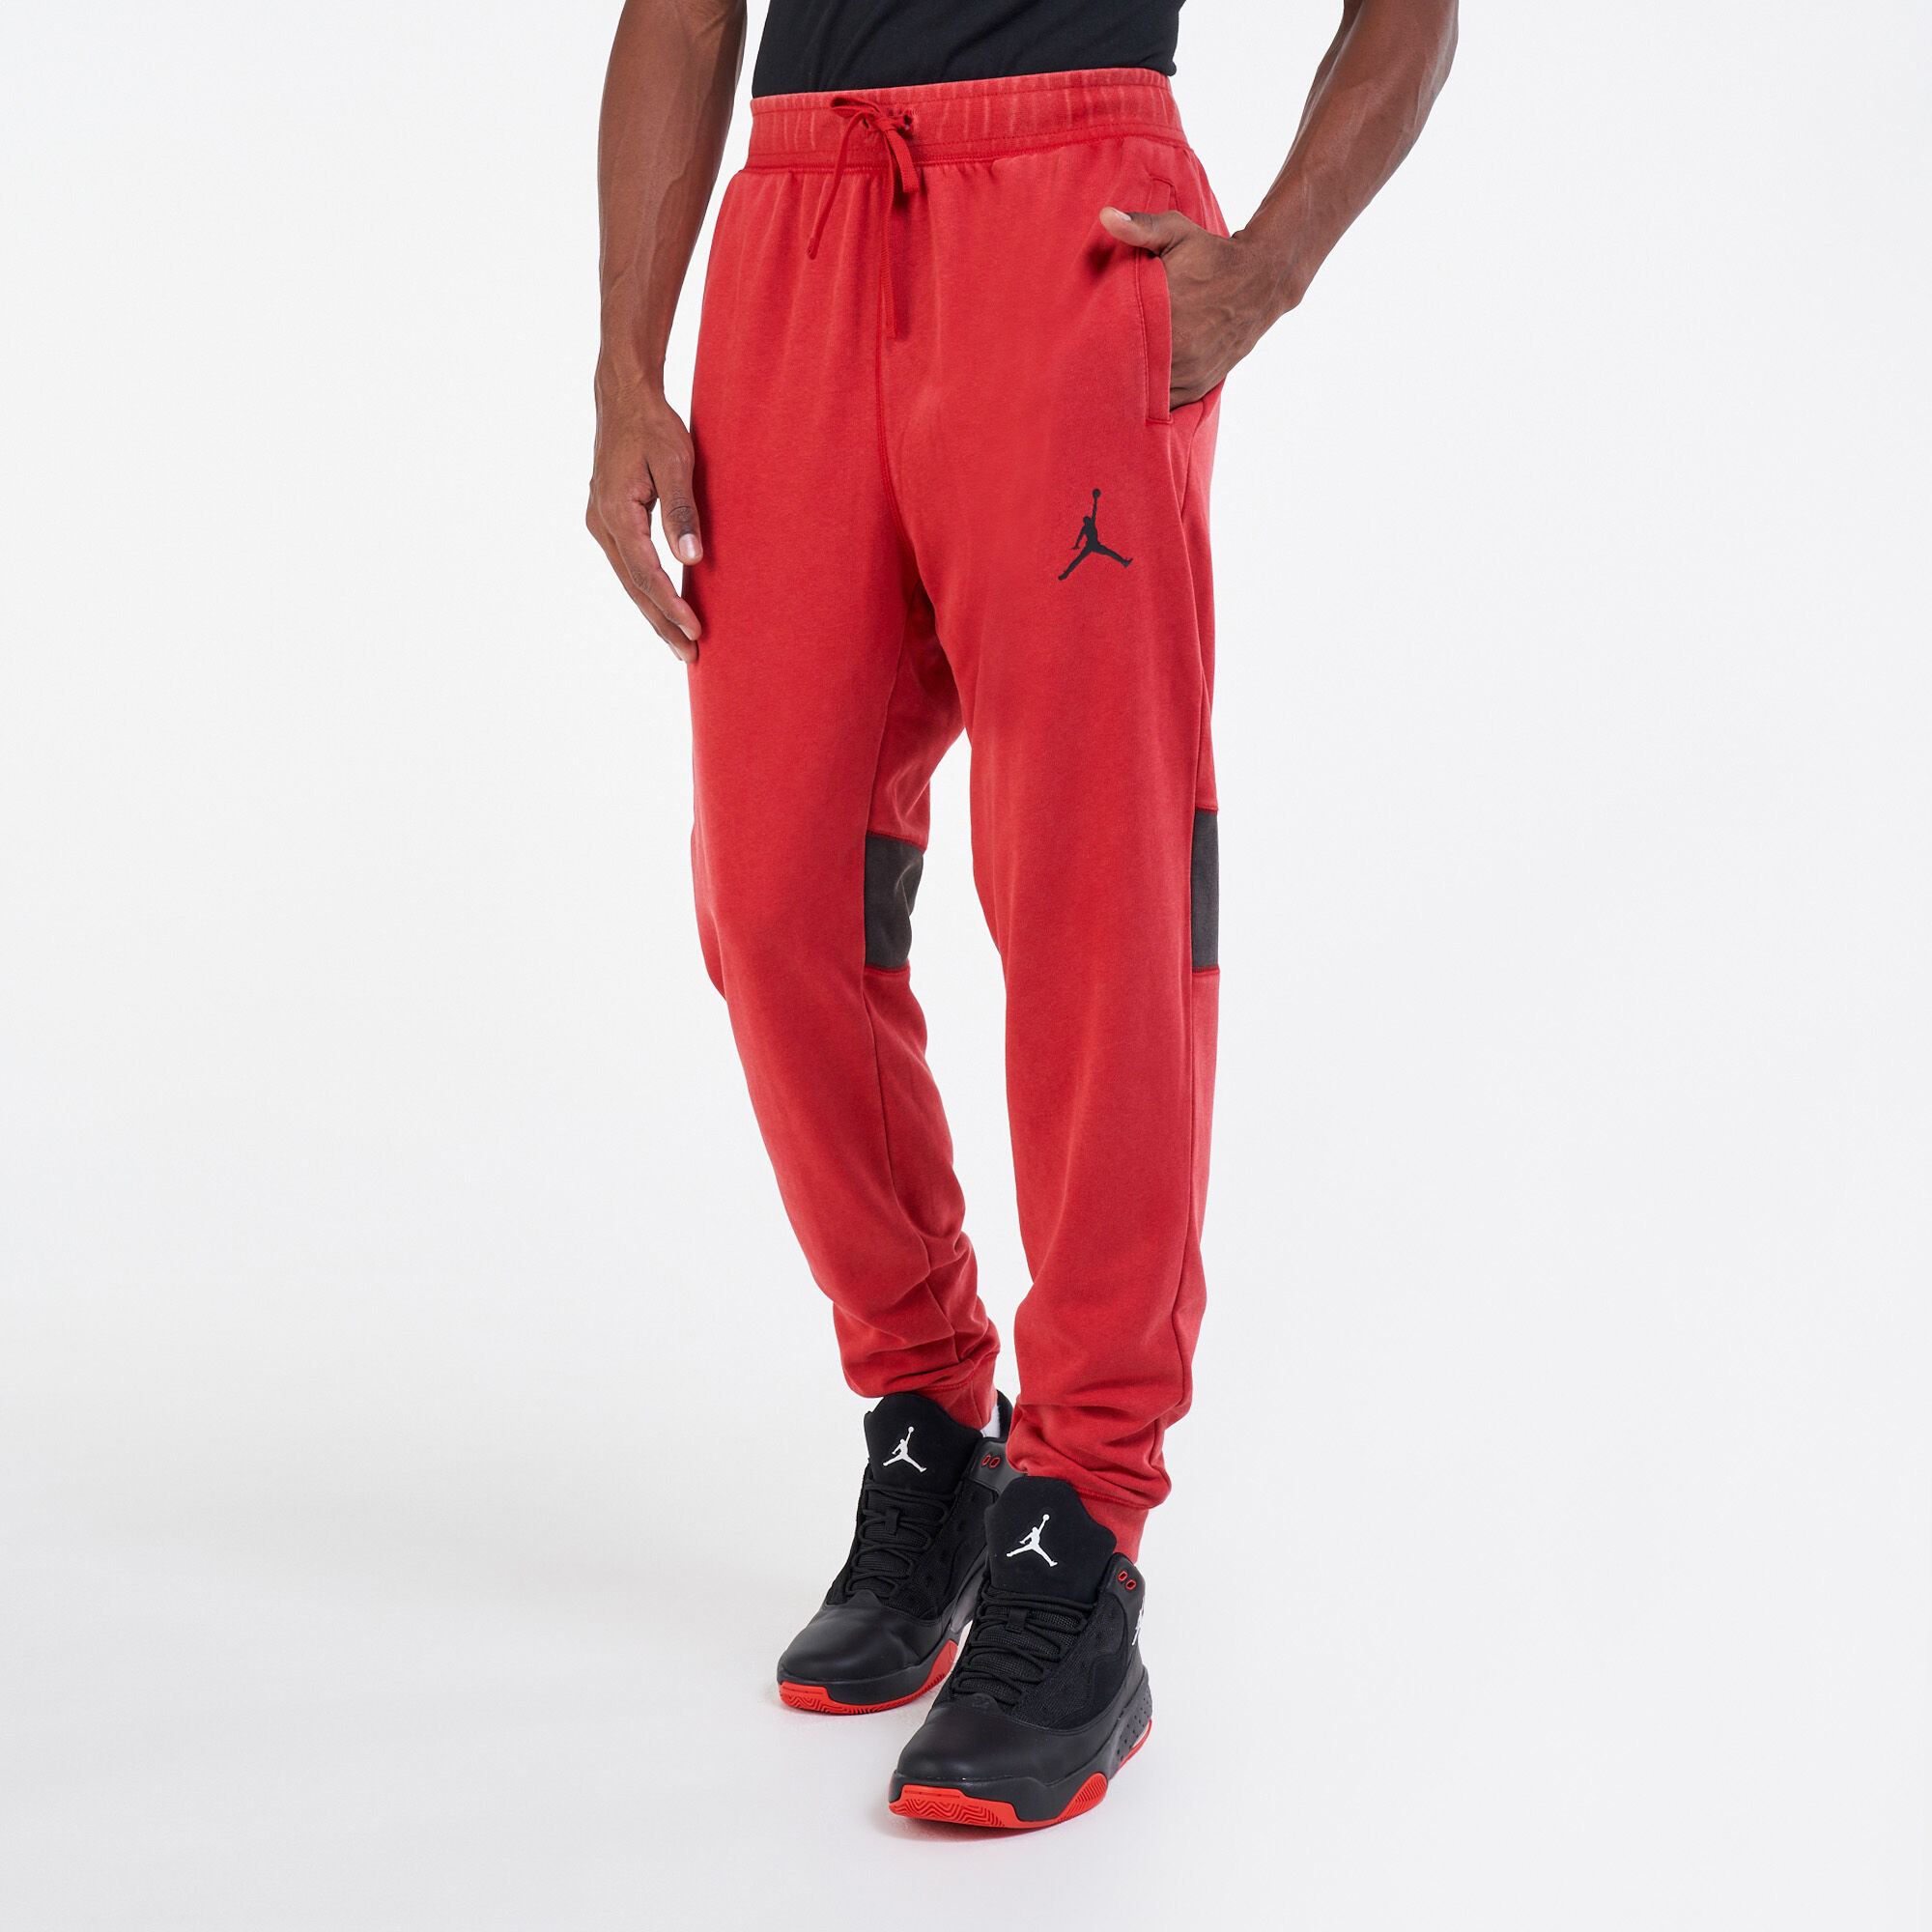 Buy Black Track Pants for Boys by Jordan Online  Ajiocom